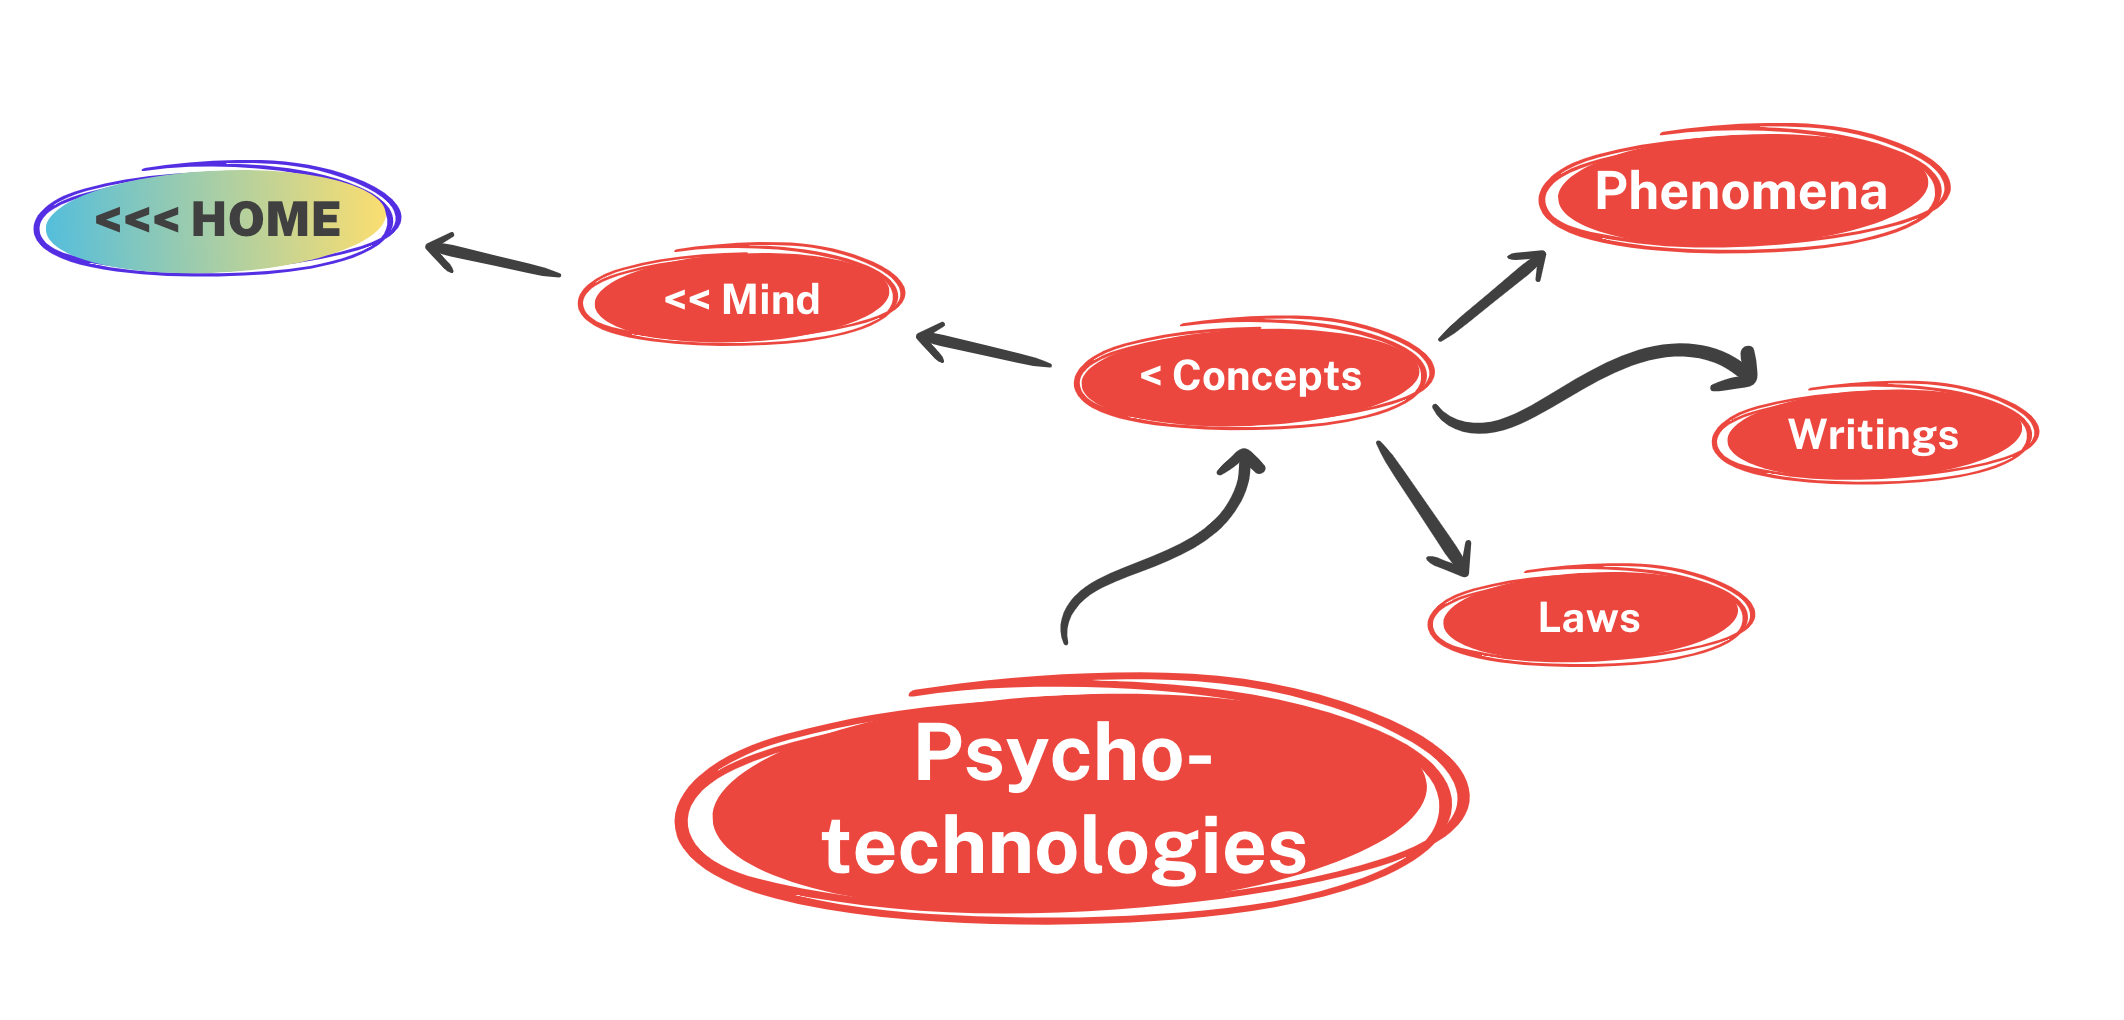 Psycho-technologies